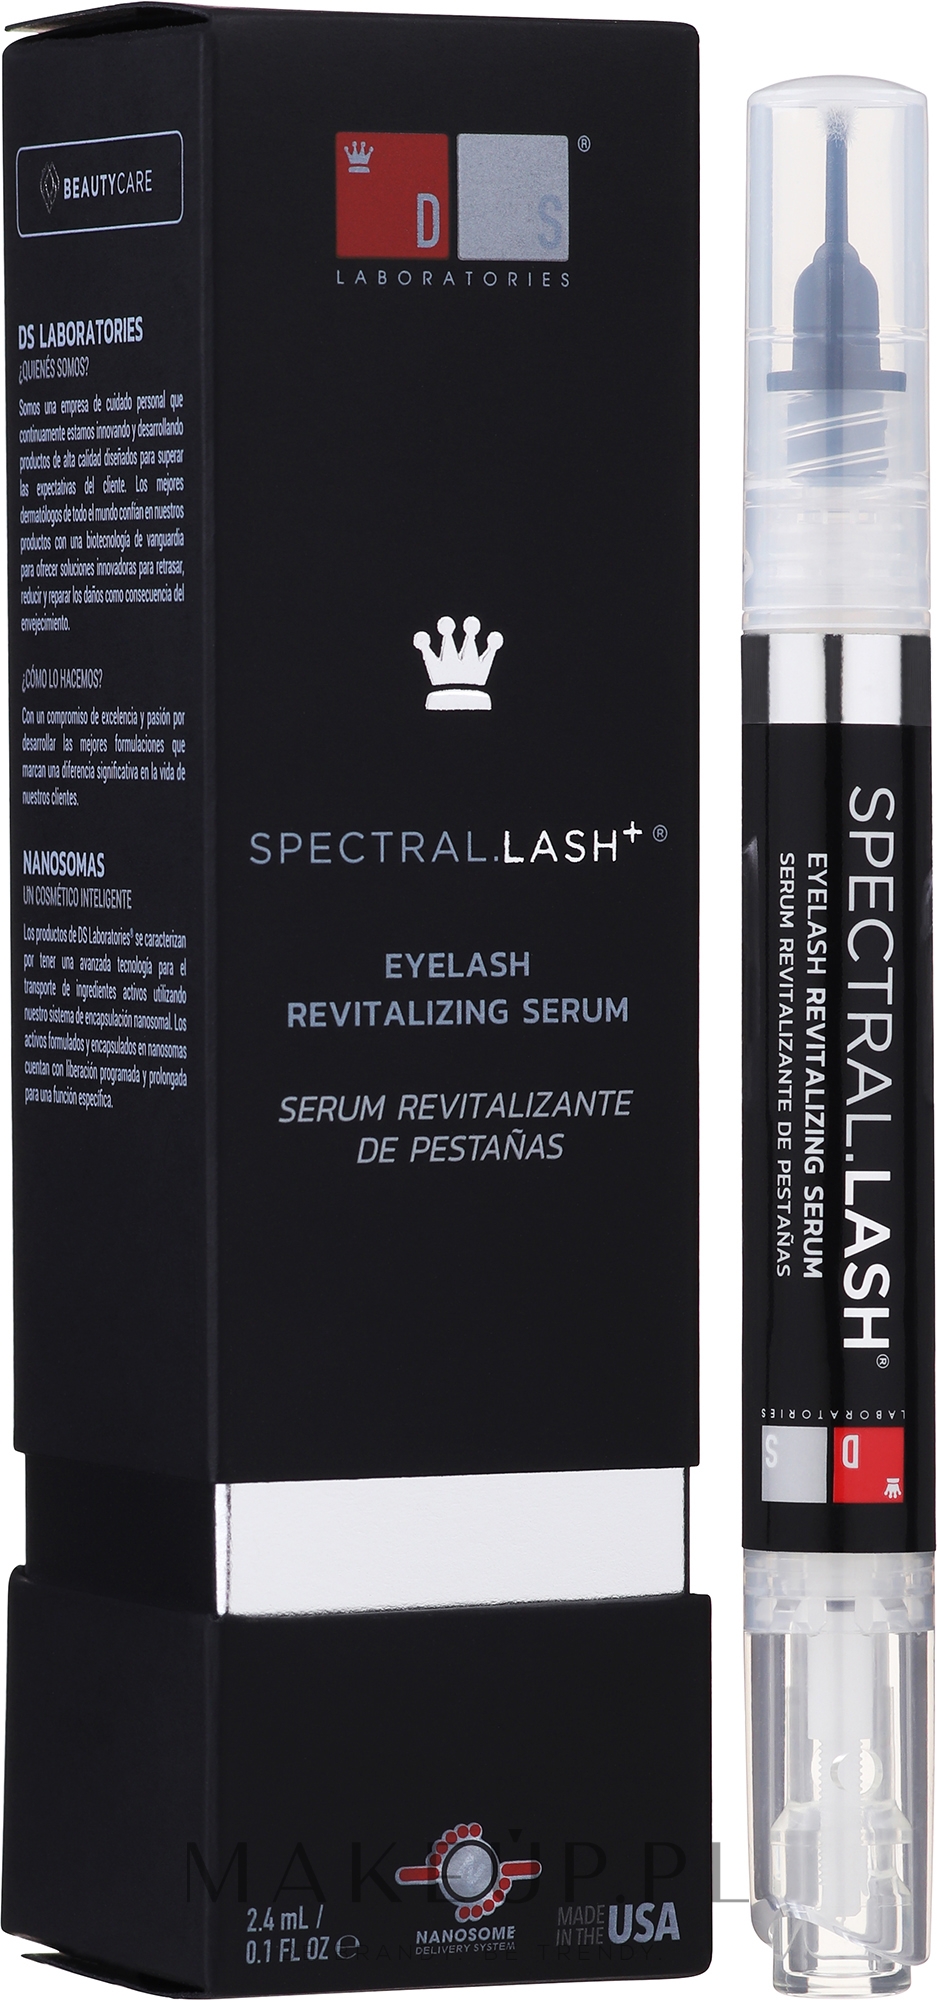 Serum do rzęs - DS Laboratories Spectral.LASH Eyelash Growth Serum — Zdjęcie 2.4 ml